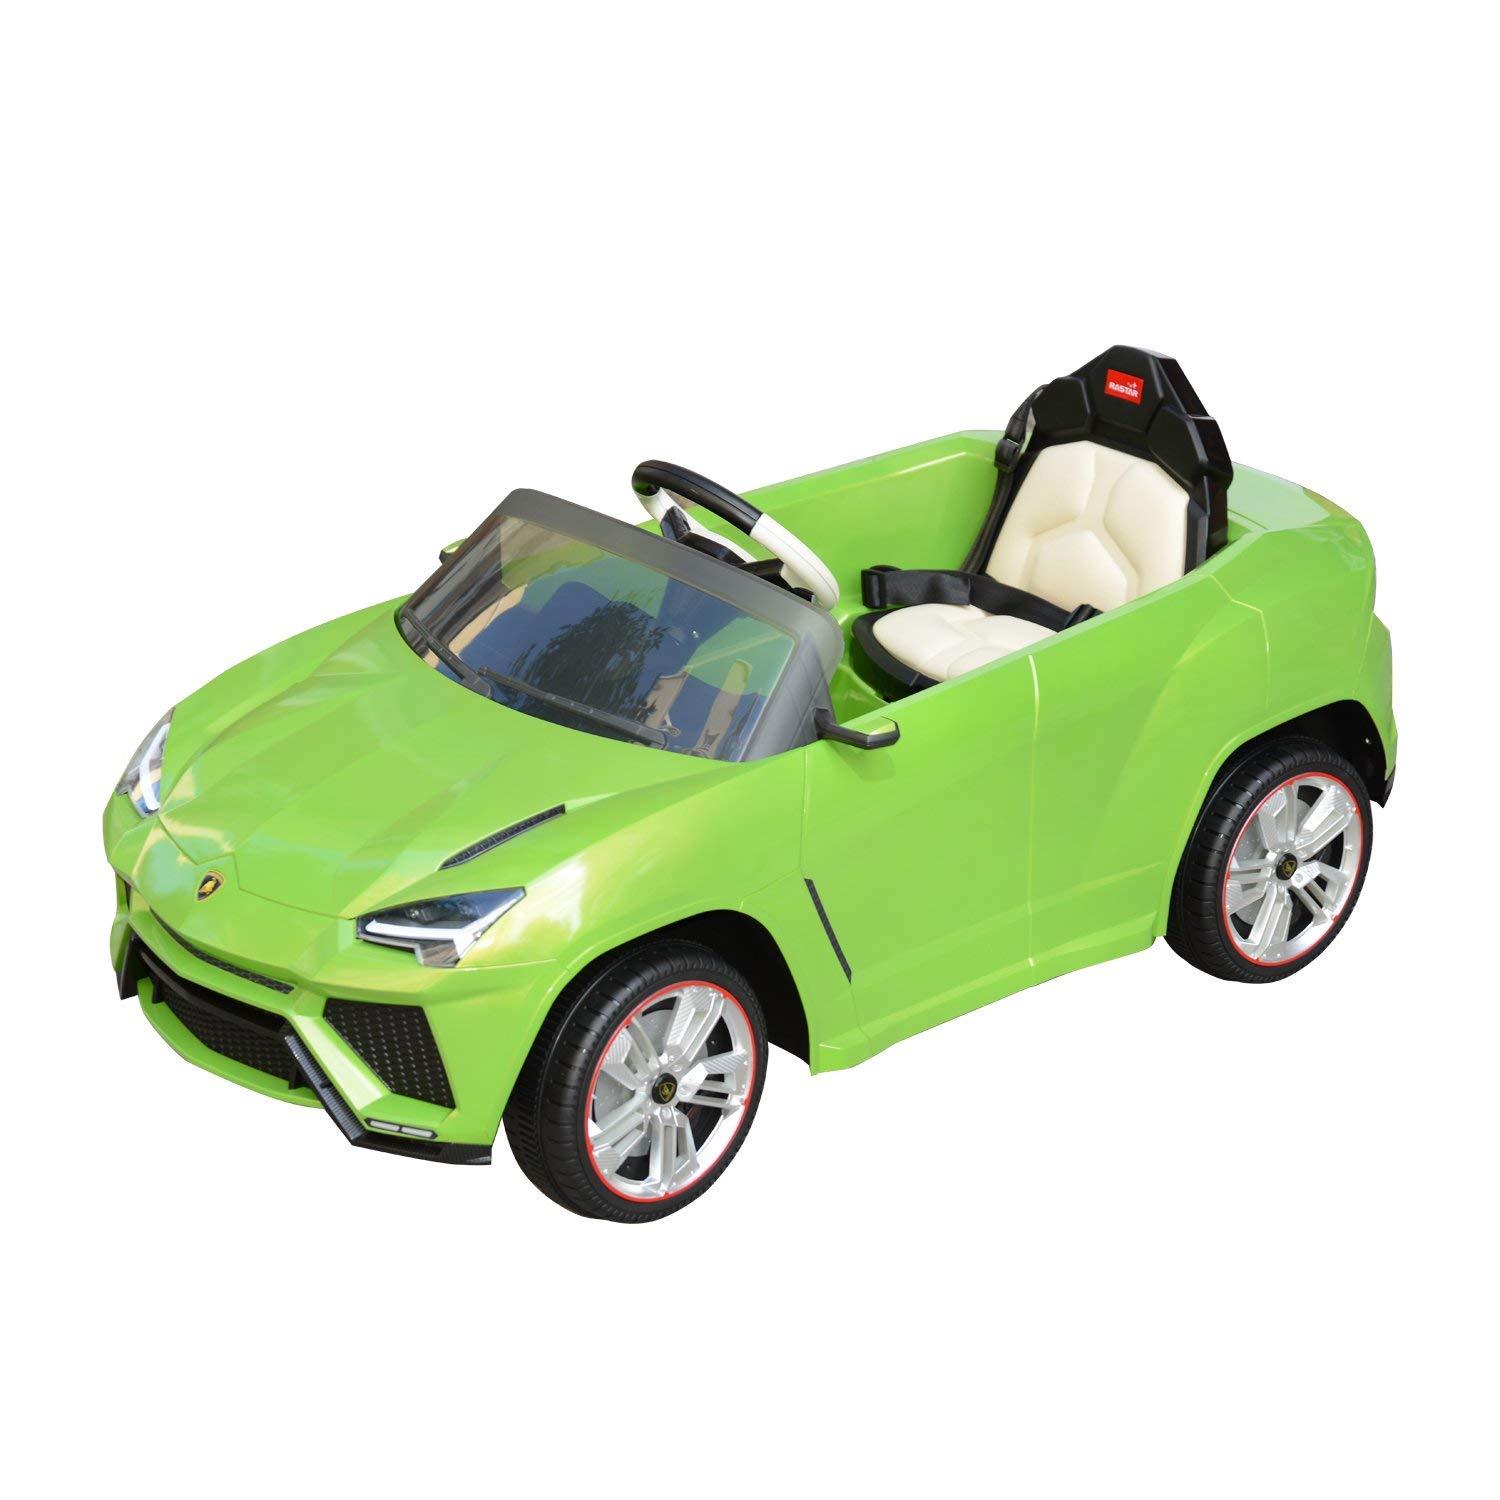 Green toy car photo